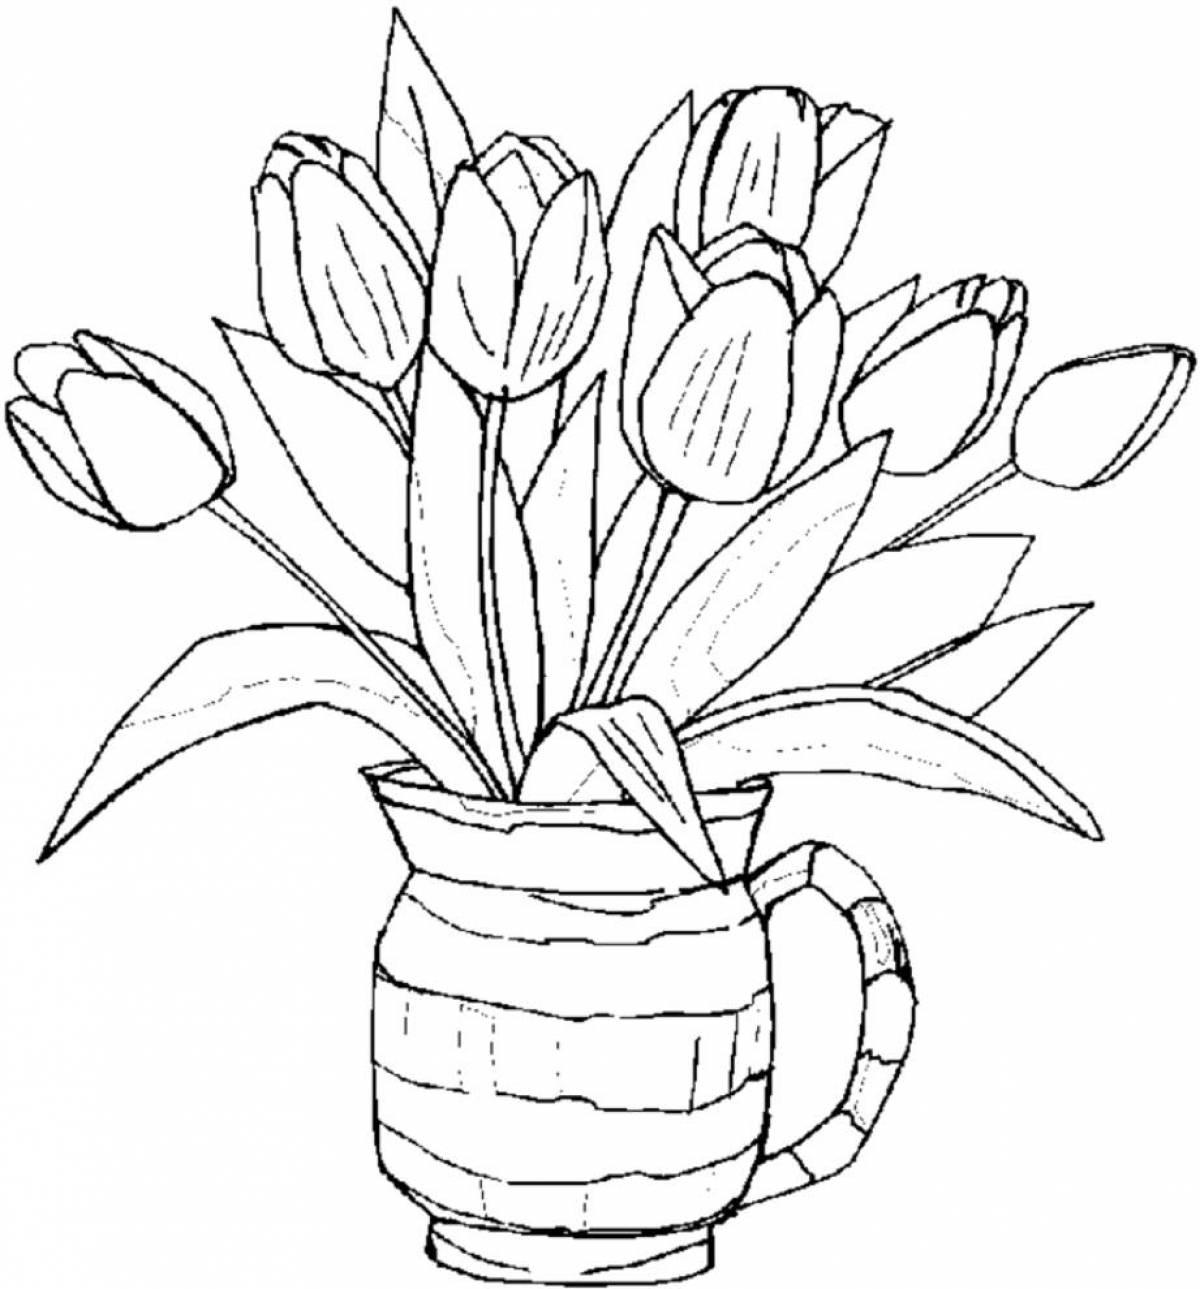 Tulips in a mug